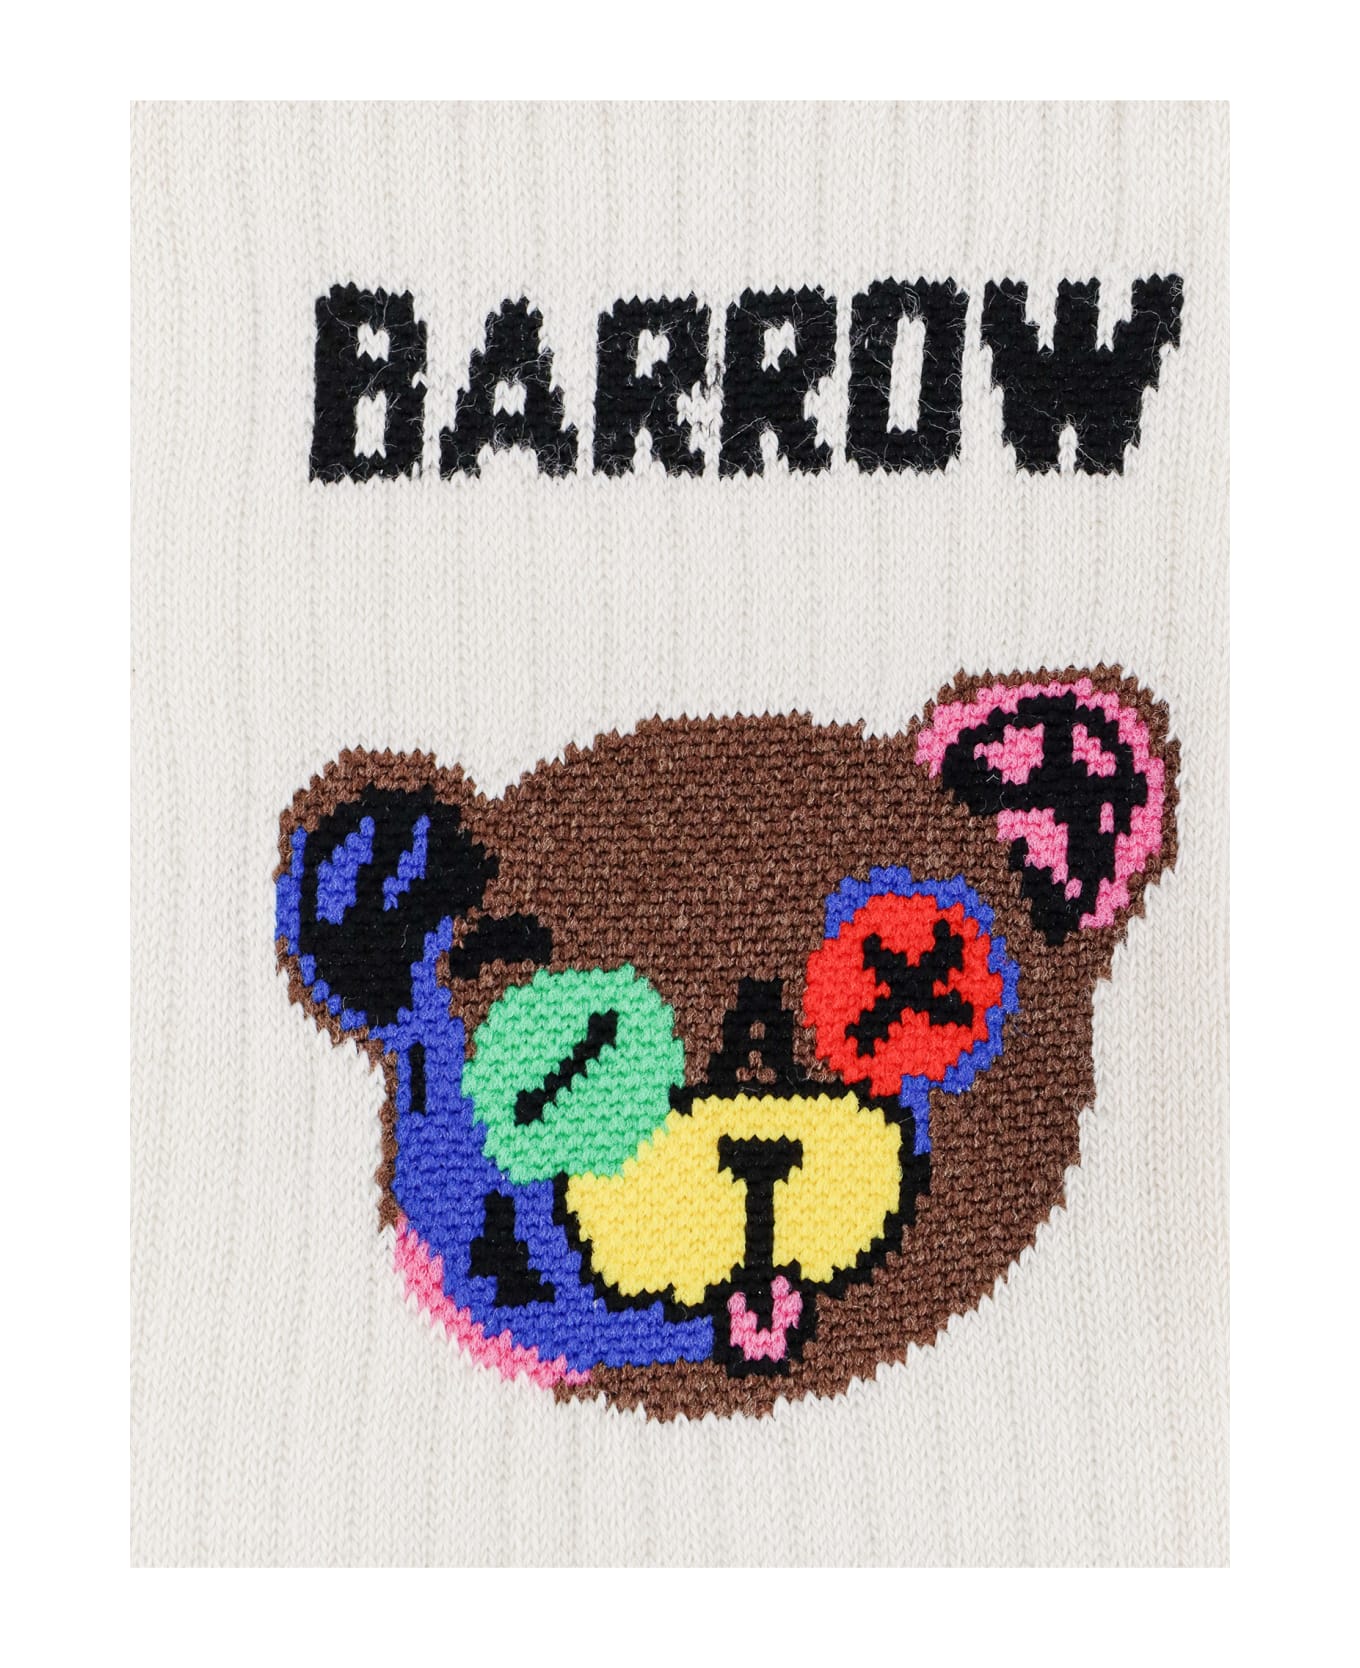 Barrow Socks - Turtledove